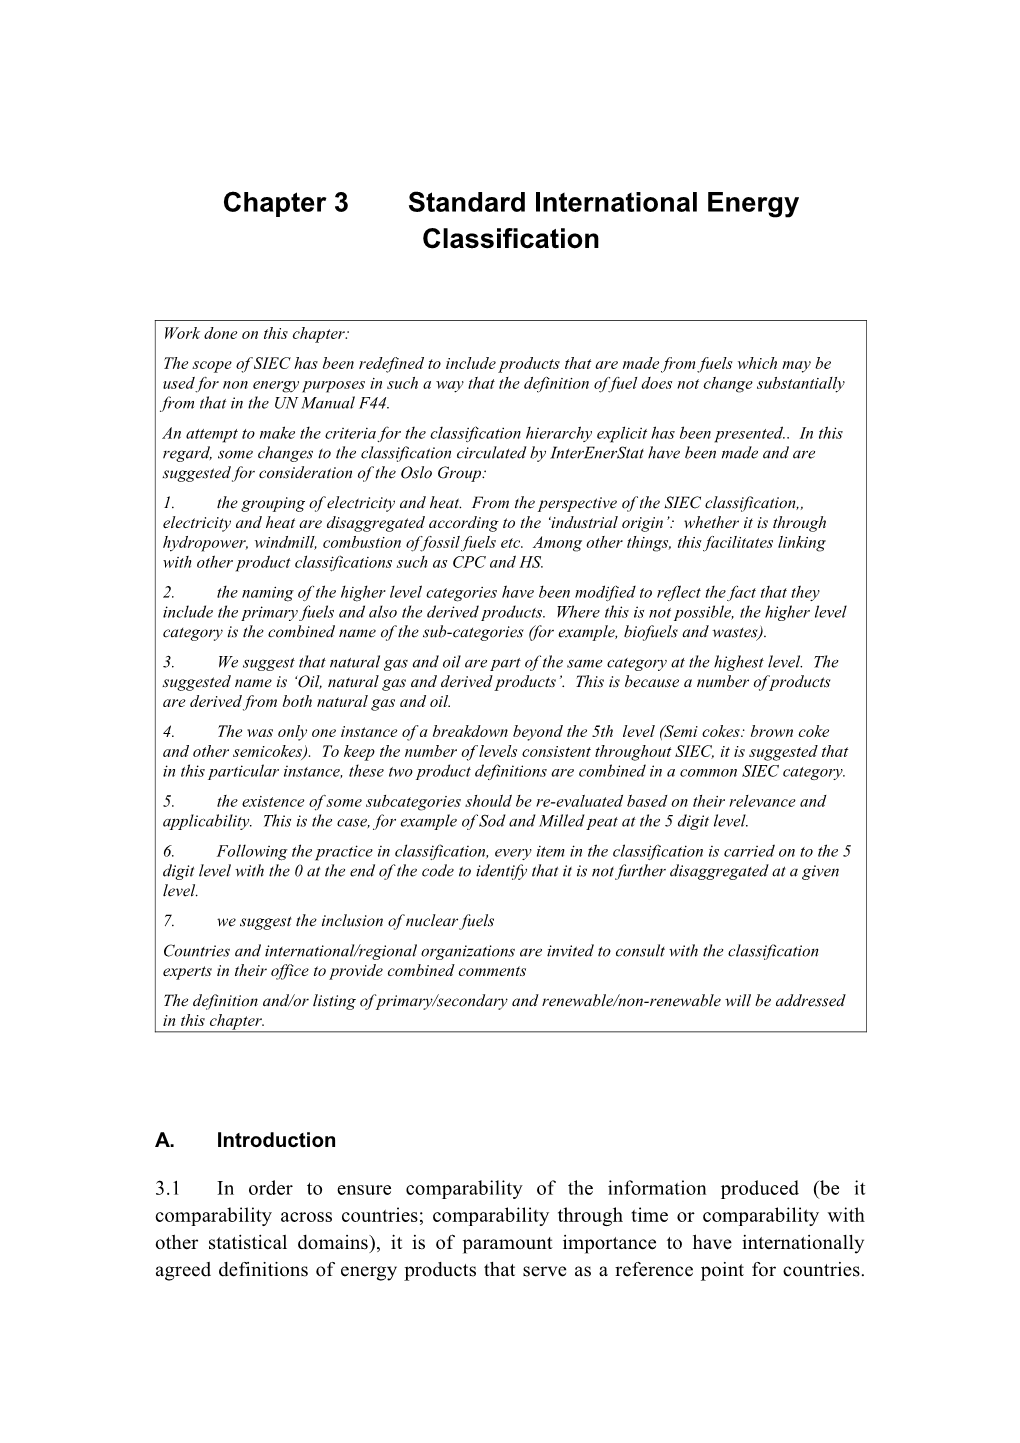 Chapter 3Standard International Energy Classification